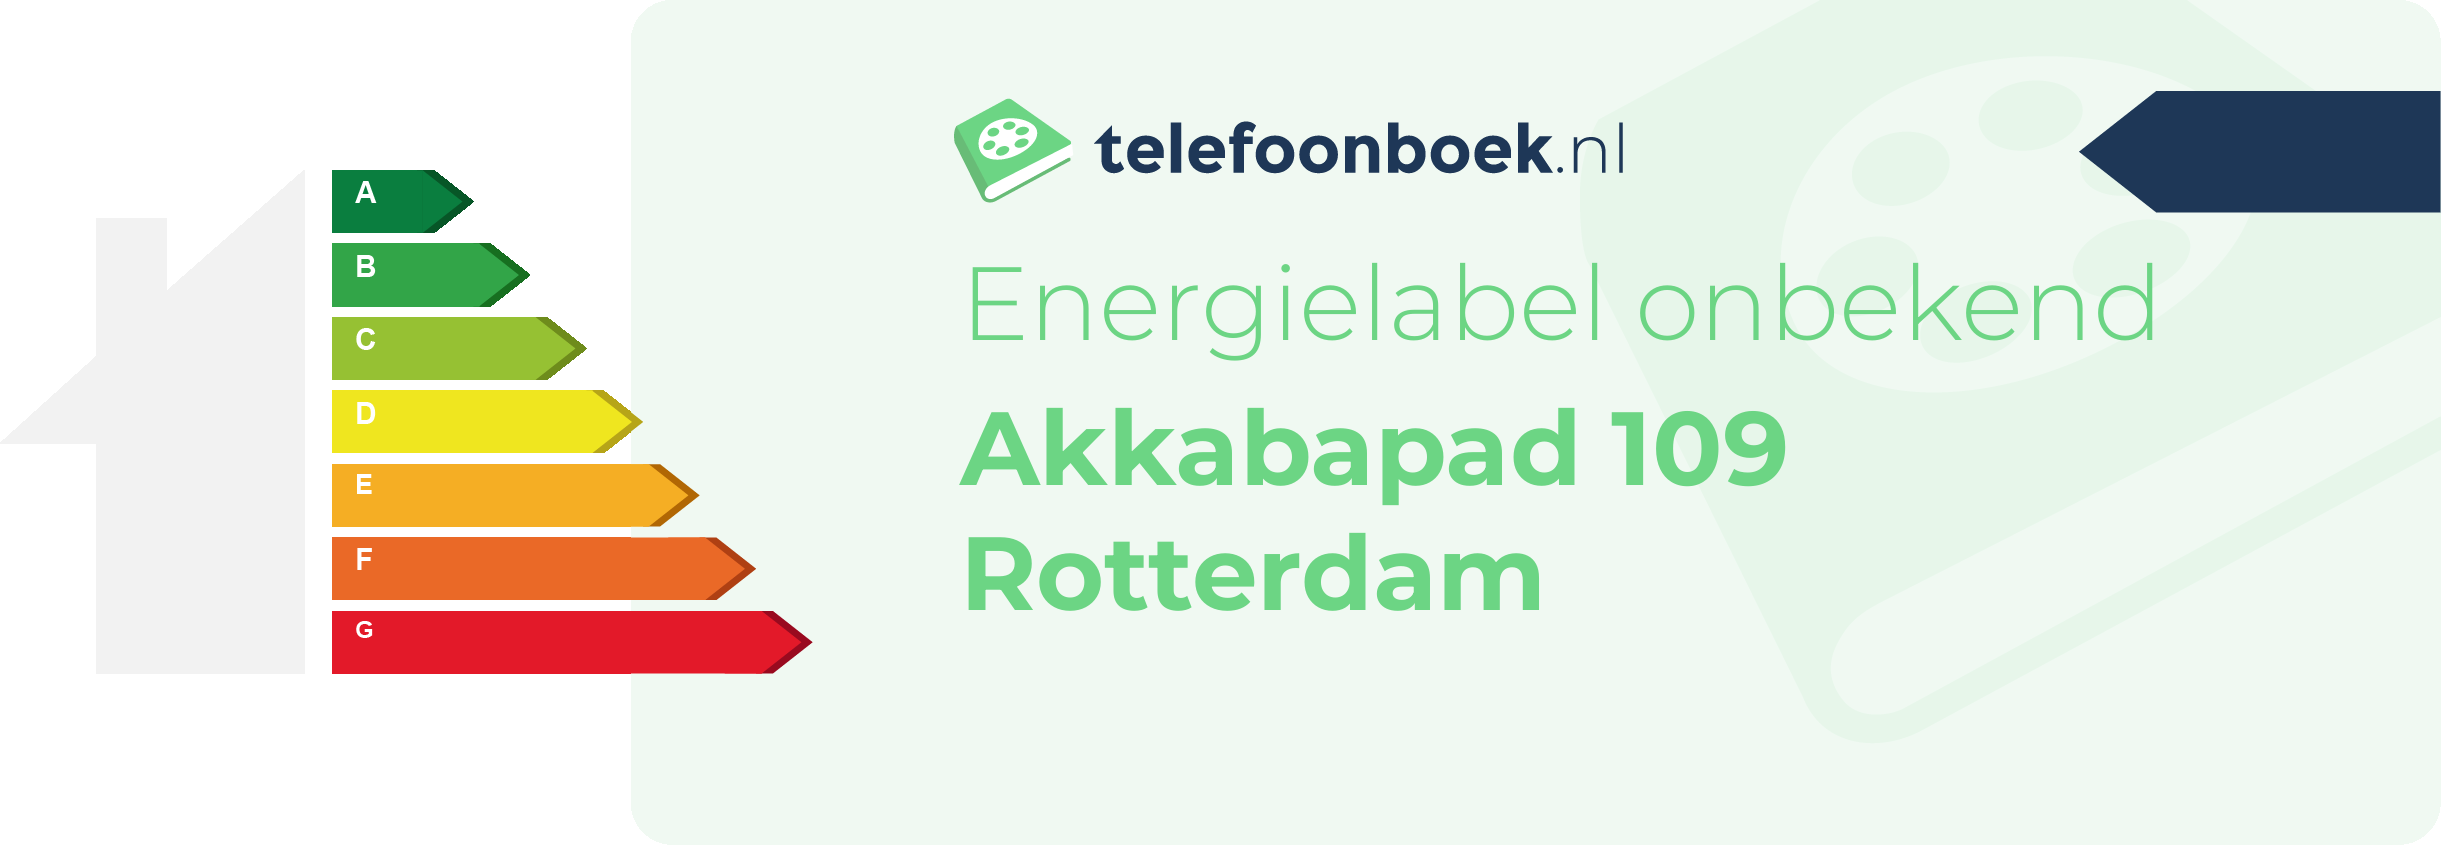 Energielabel Akkabapad 109 Rotterdam